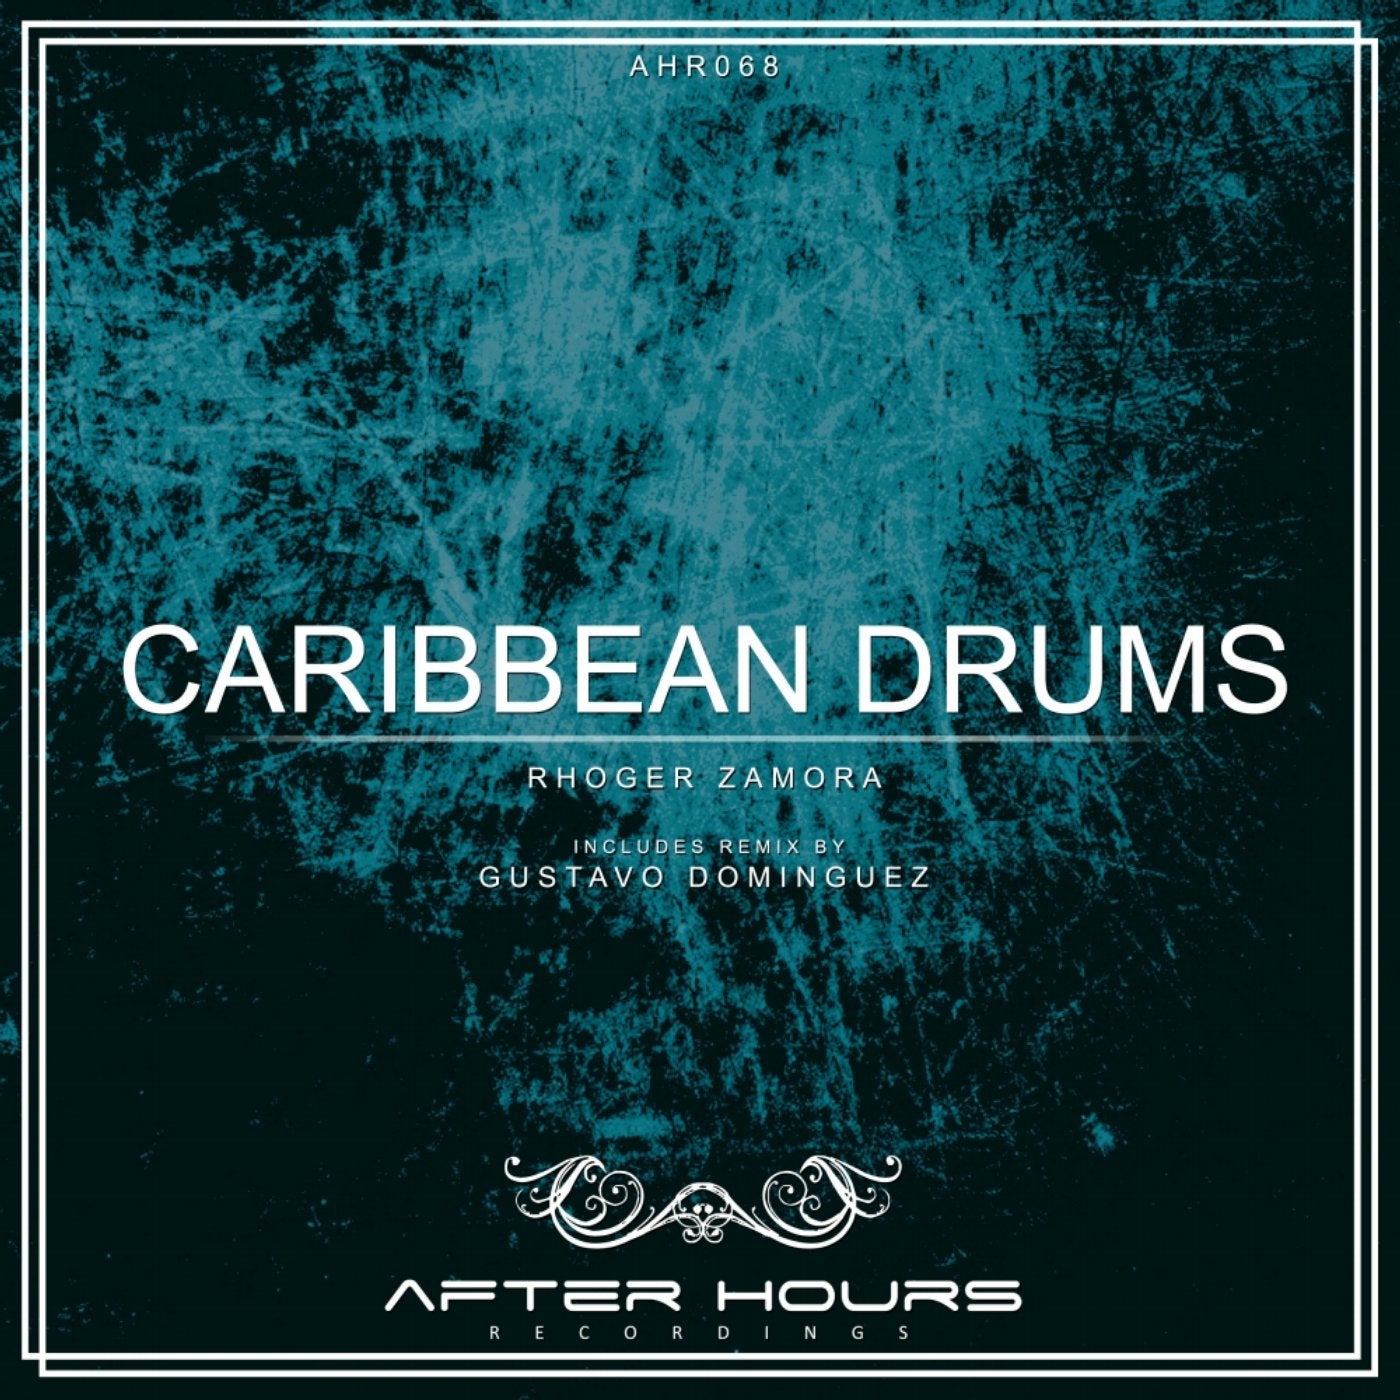 Caribbean Drums